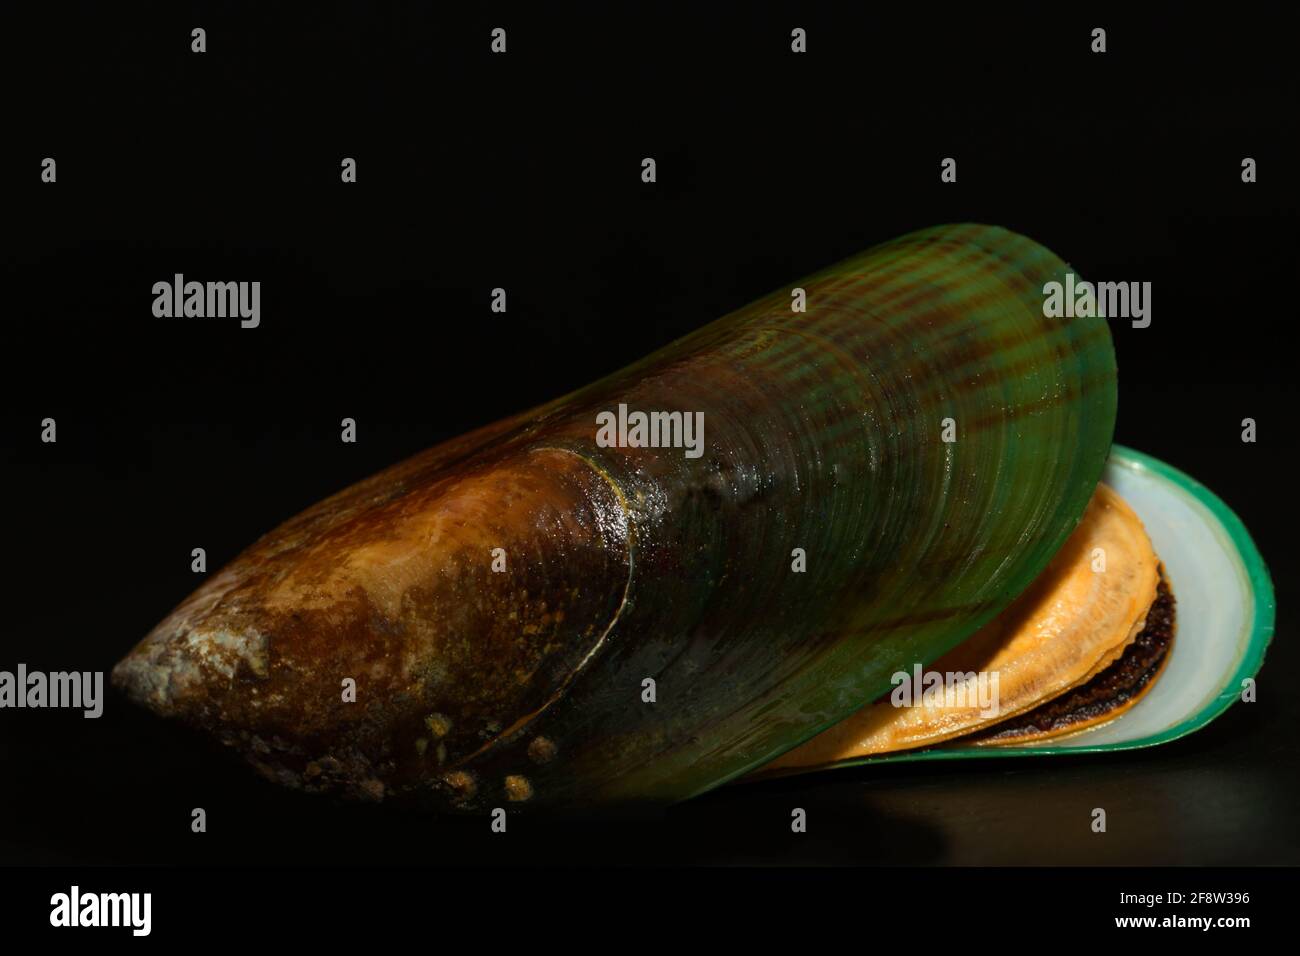 Perna canaliculus, la musella con lappatura verde della Nuova Zelanda Foto Stock